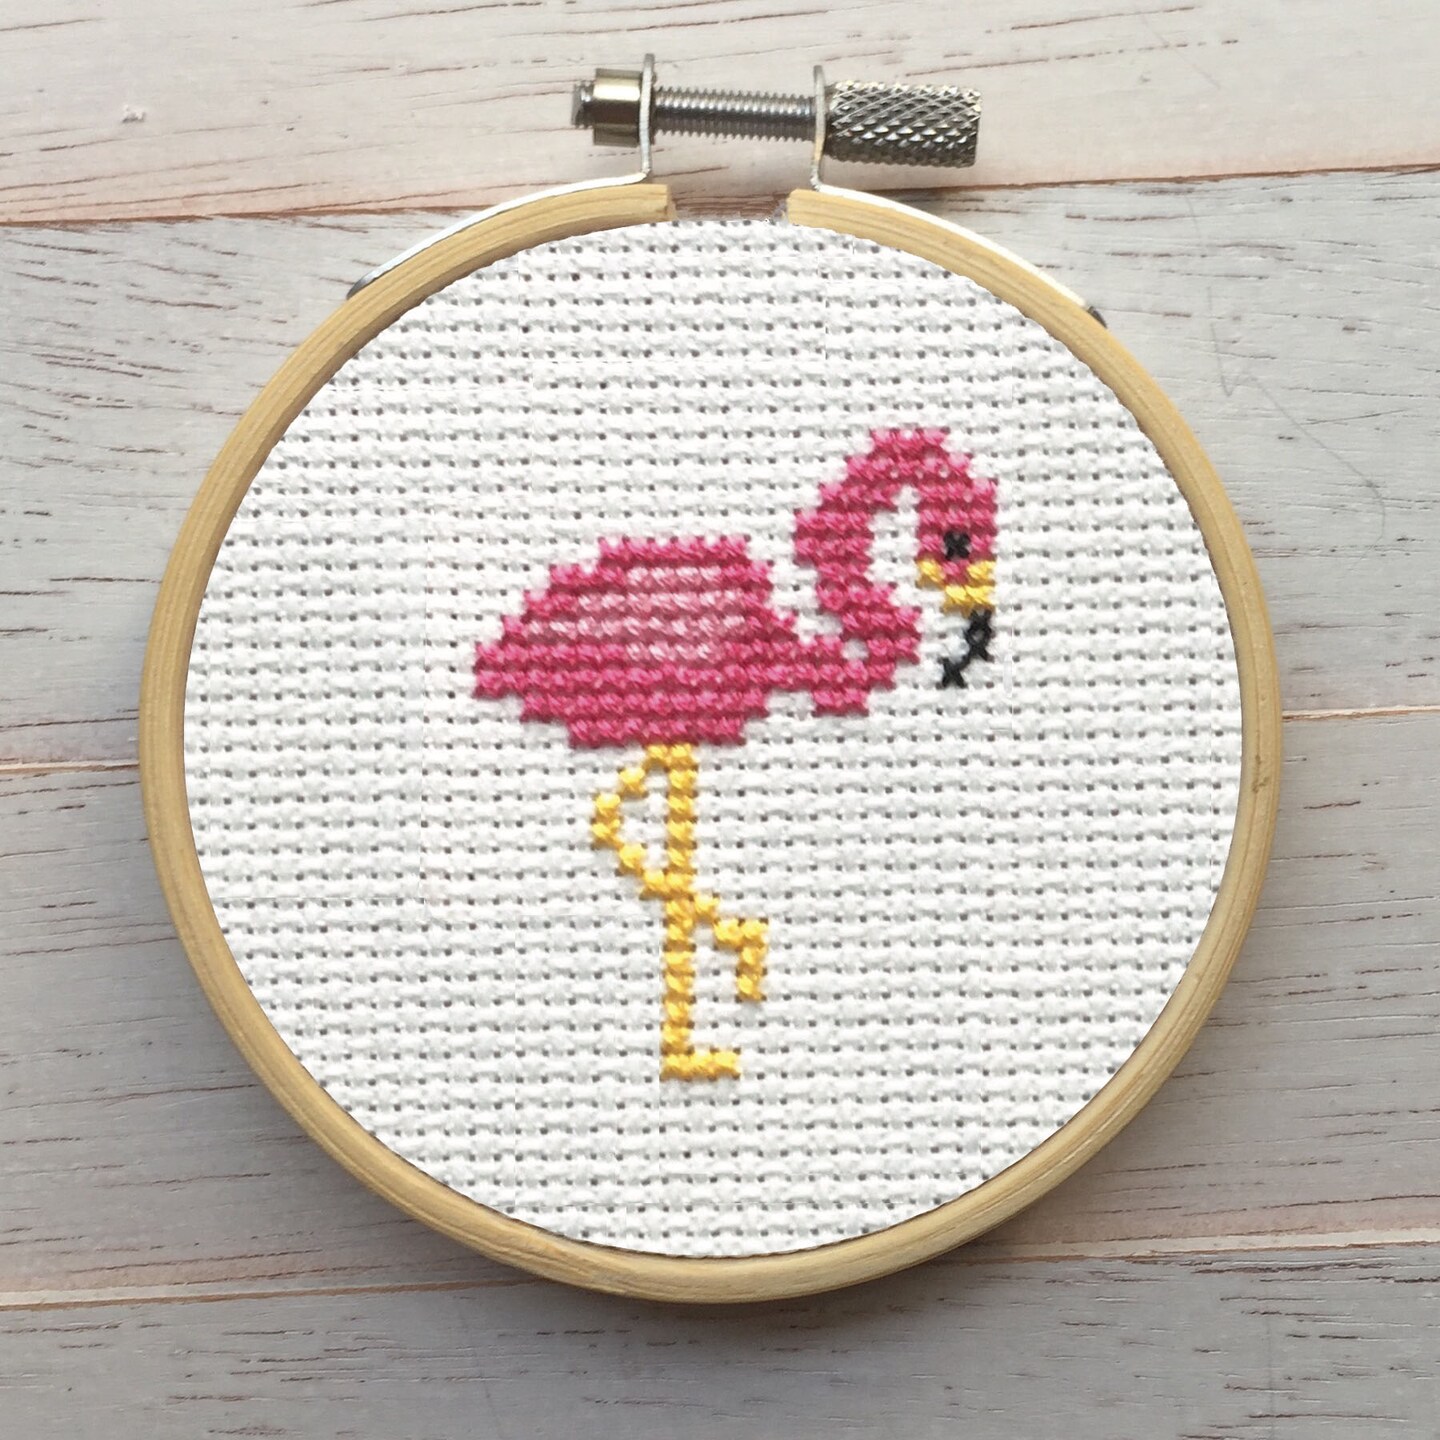 Flamingo Cross Stitch Kit for Beginners - Hannah Hand Makes